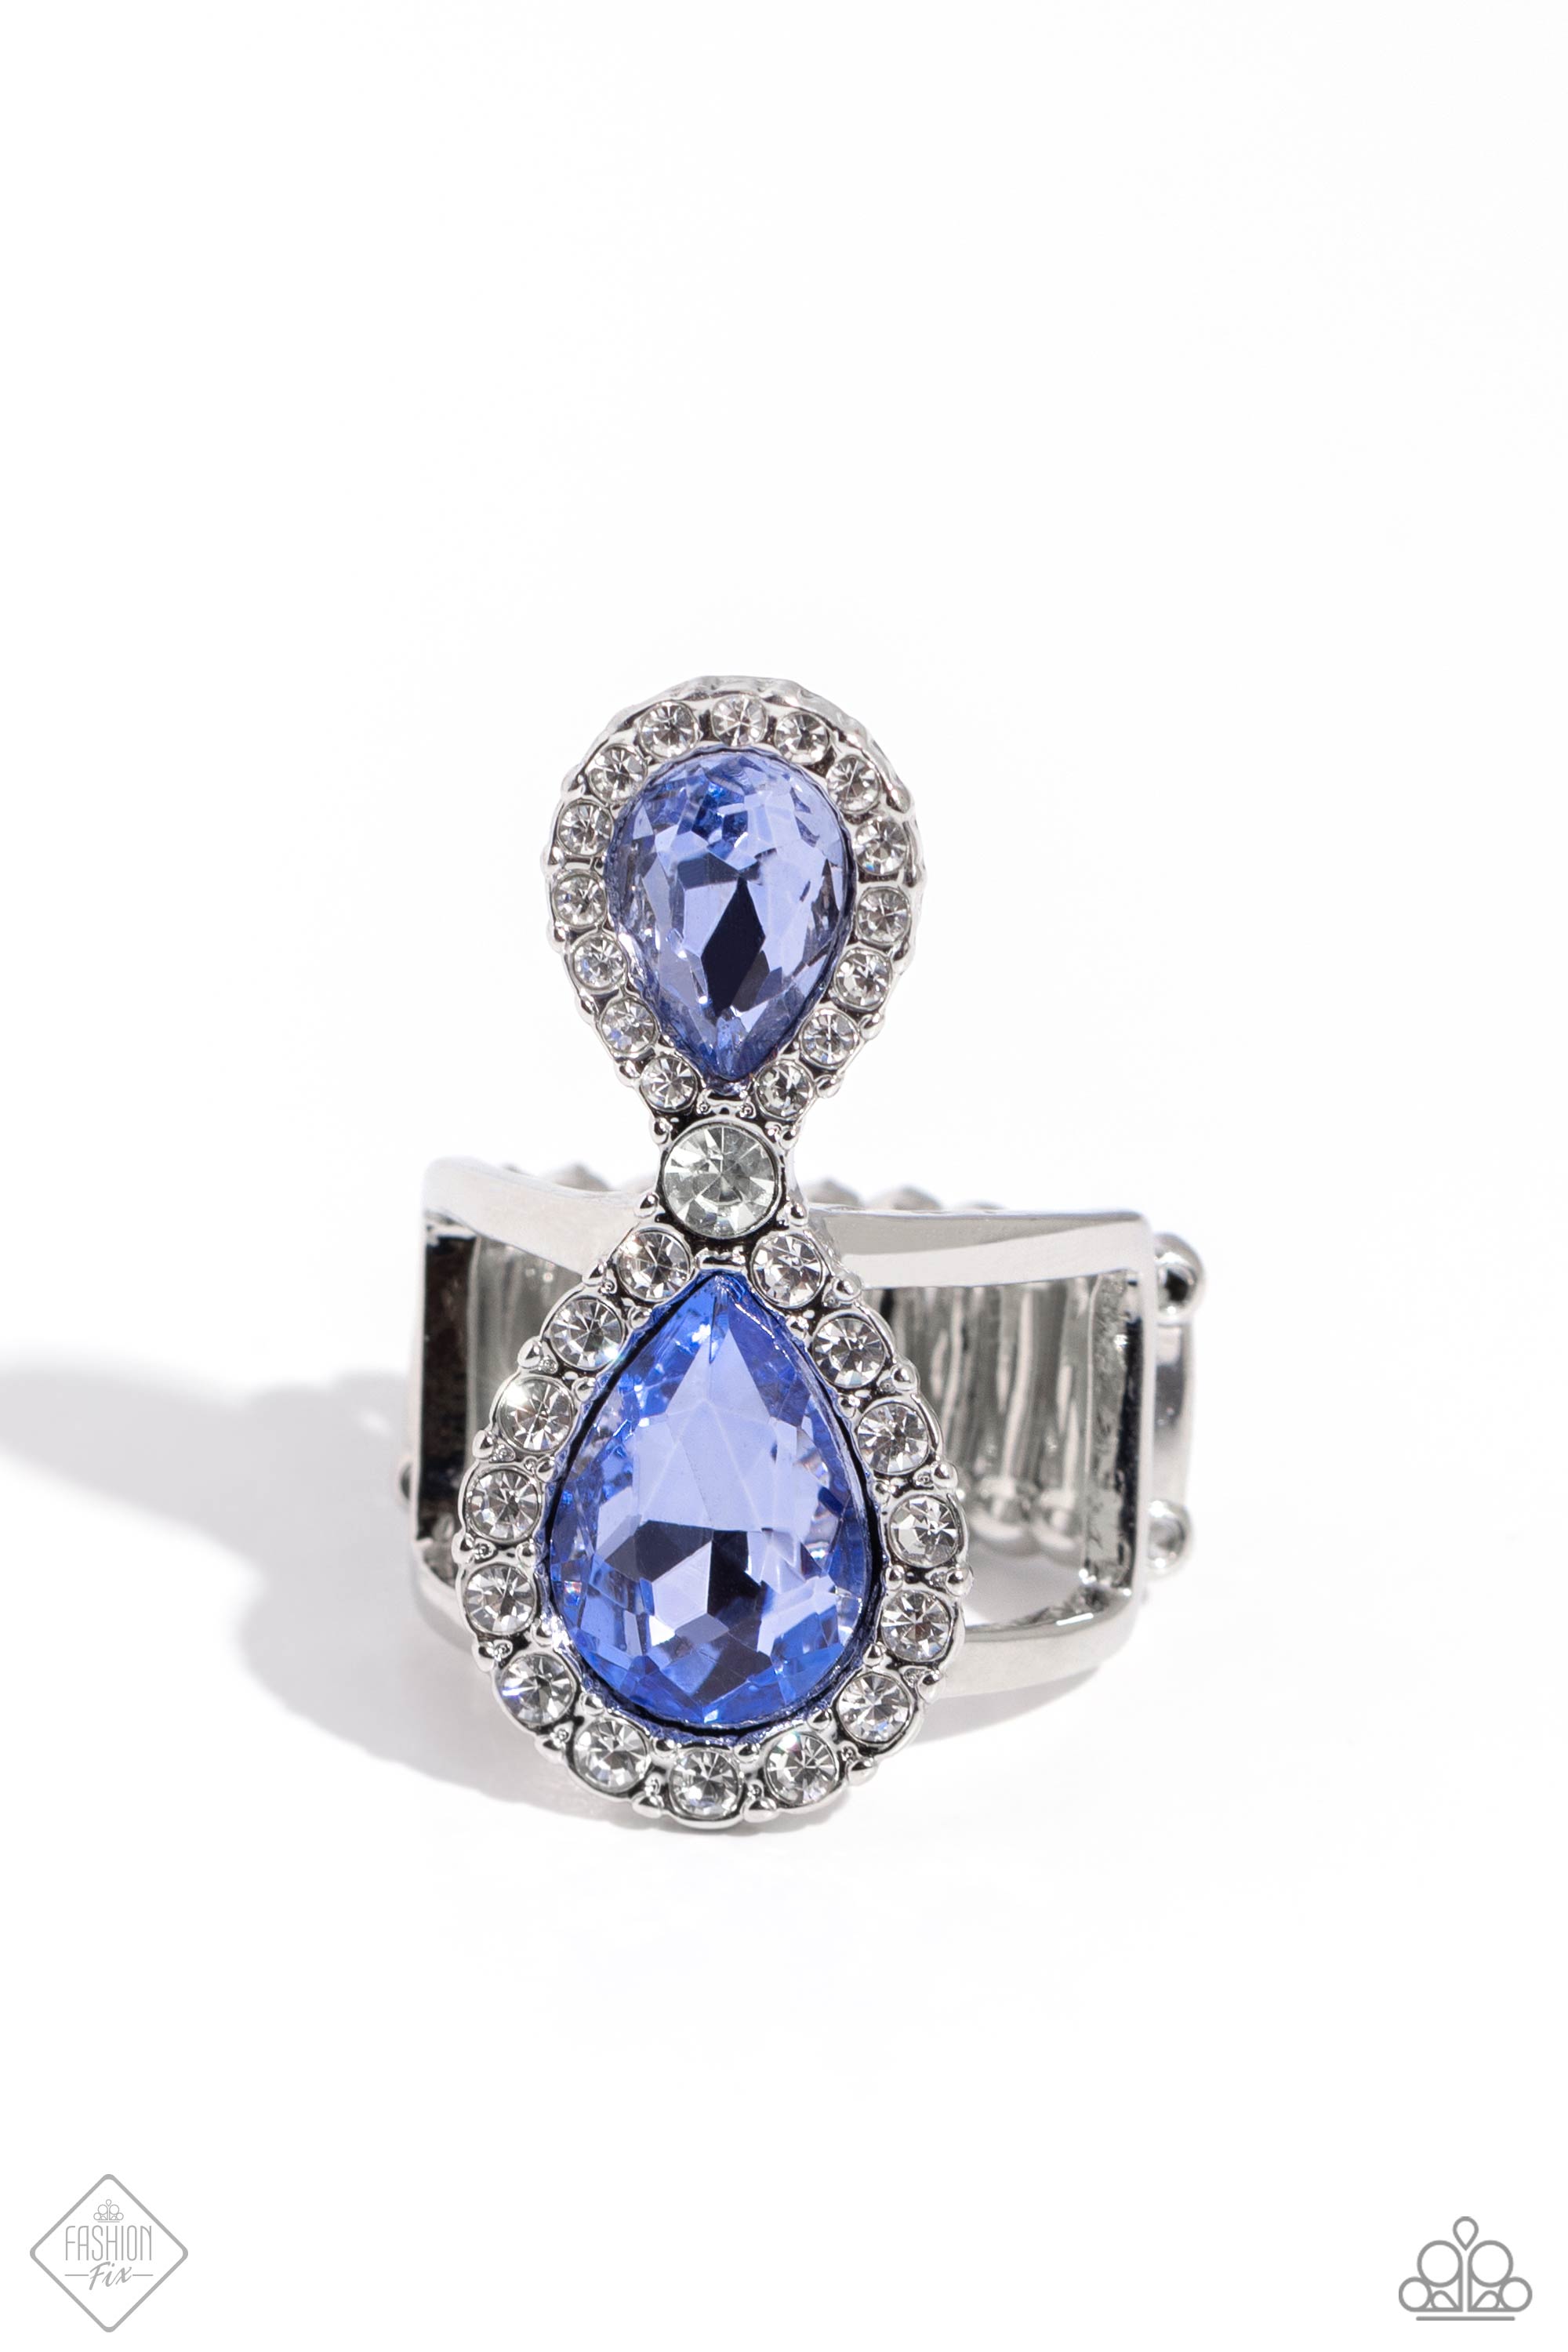 Majestic Manifestation Blue Ring - Paparazzi Accessories- lightbox - CarasShop.com - $5 Jewelry by Cara Jewels